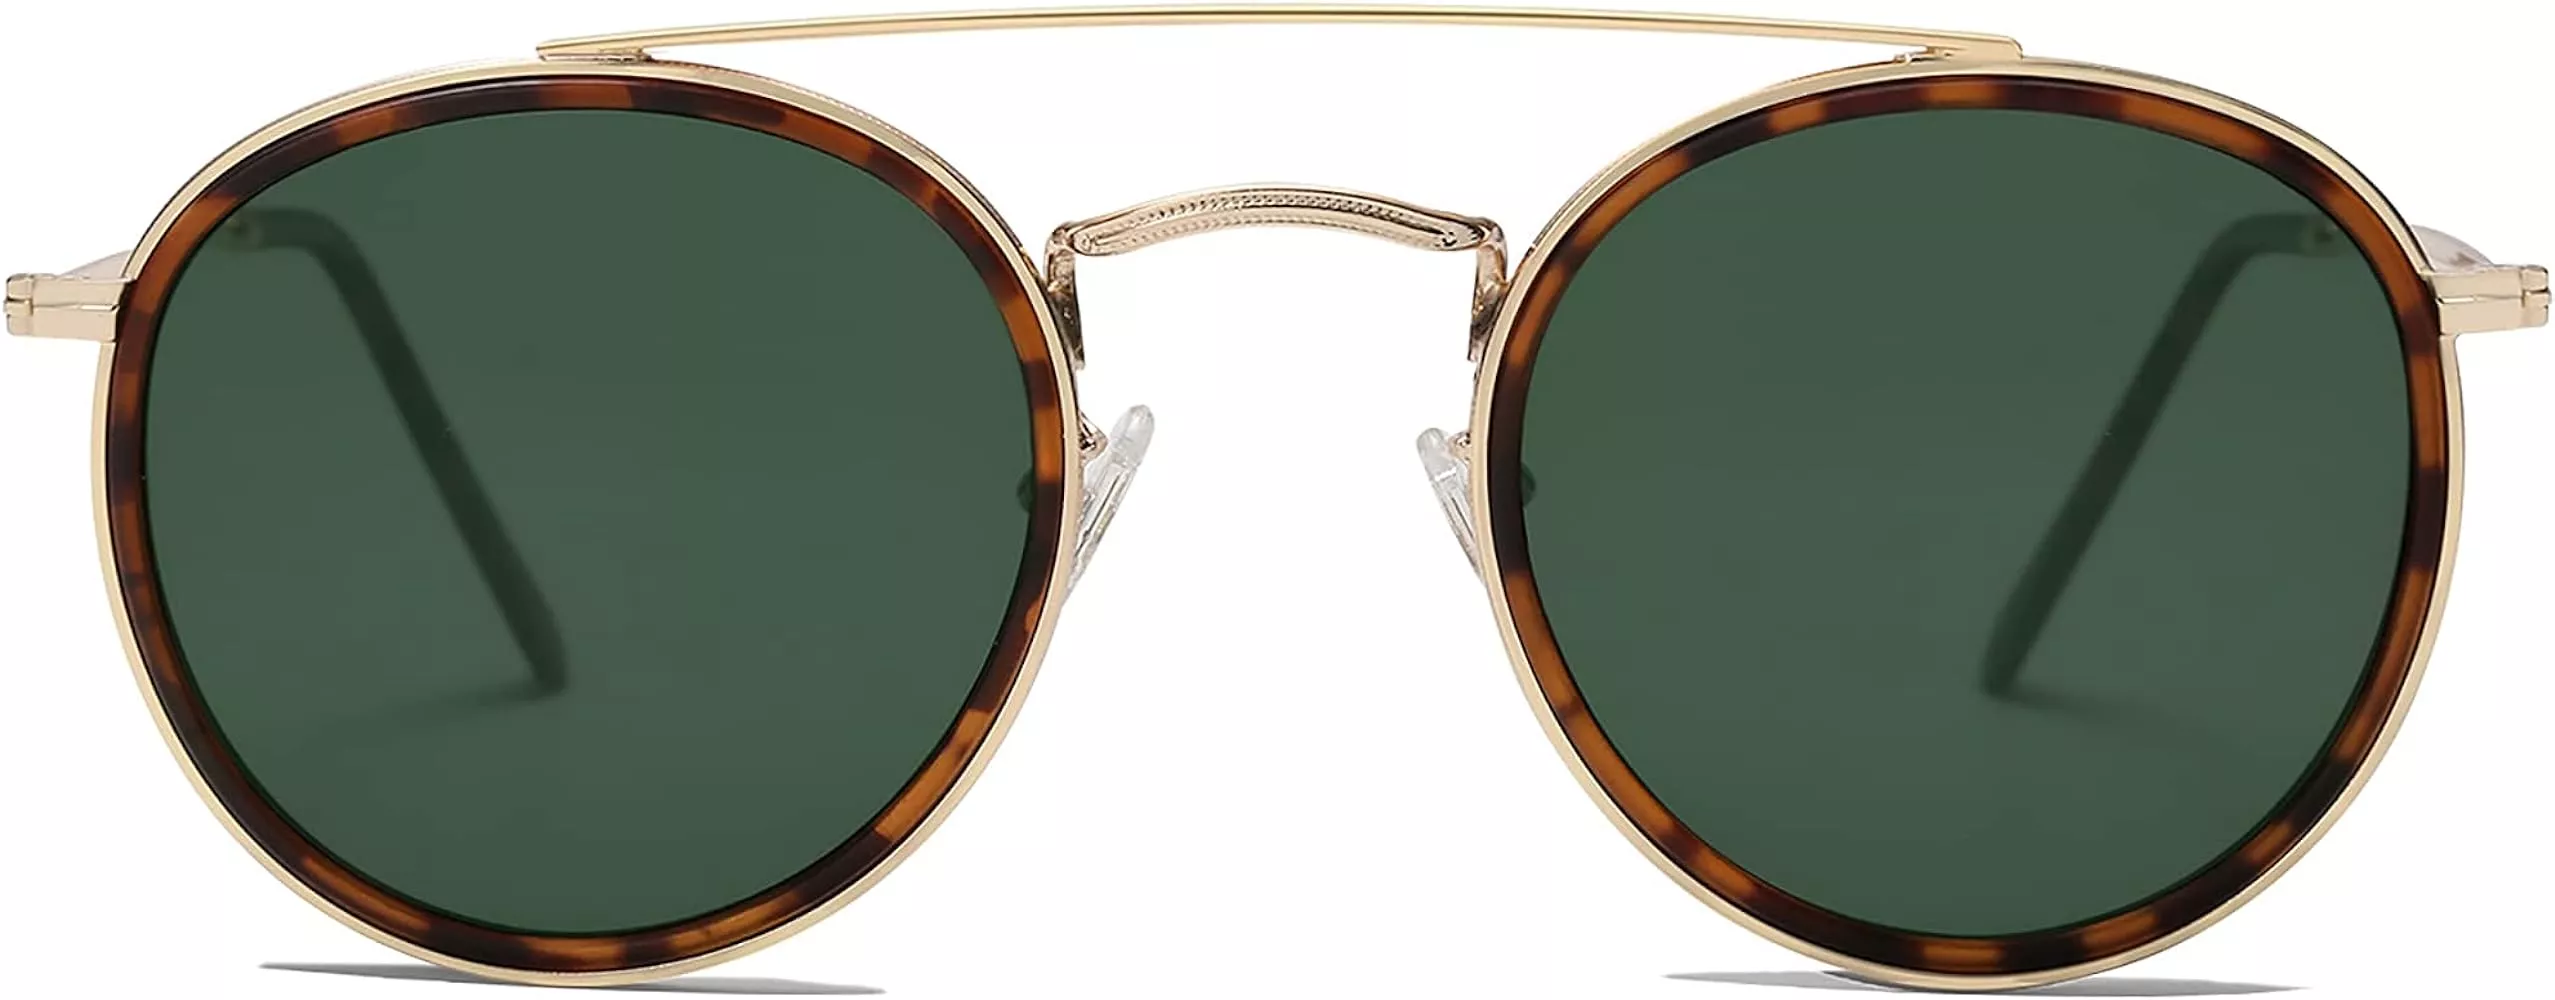 Myiaur Fashion Sunglasses for Women Polarized Driving Anti Glare UV400  Protection Stylish Design